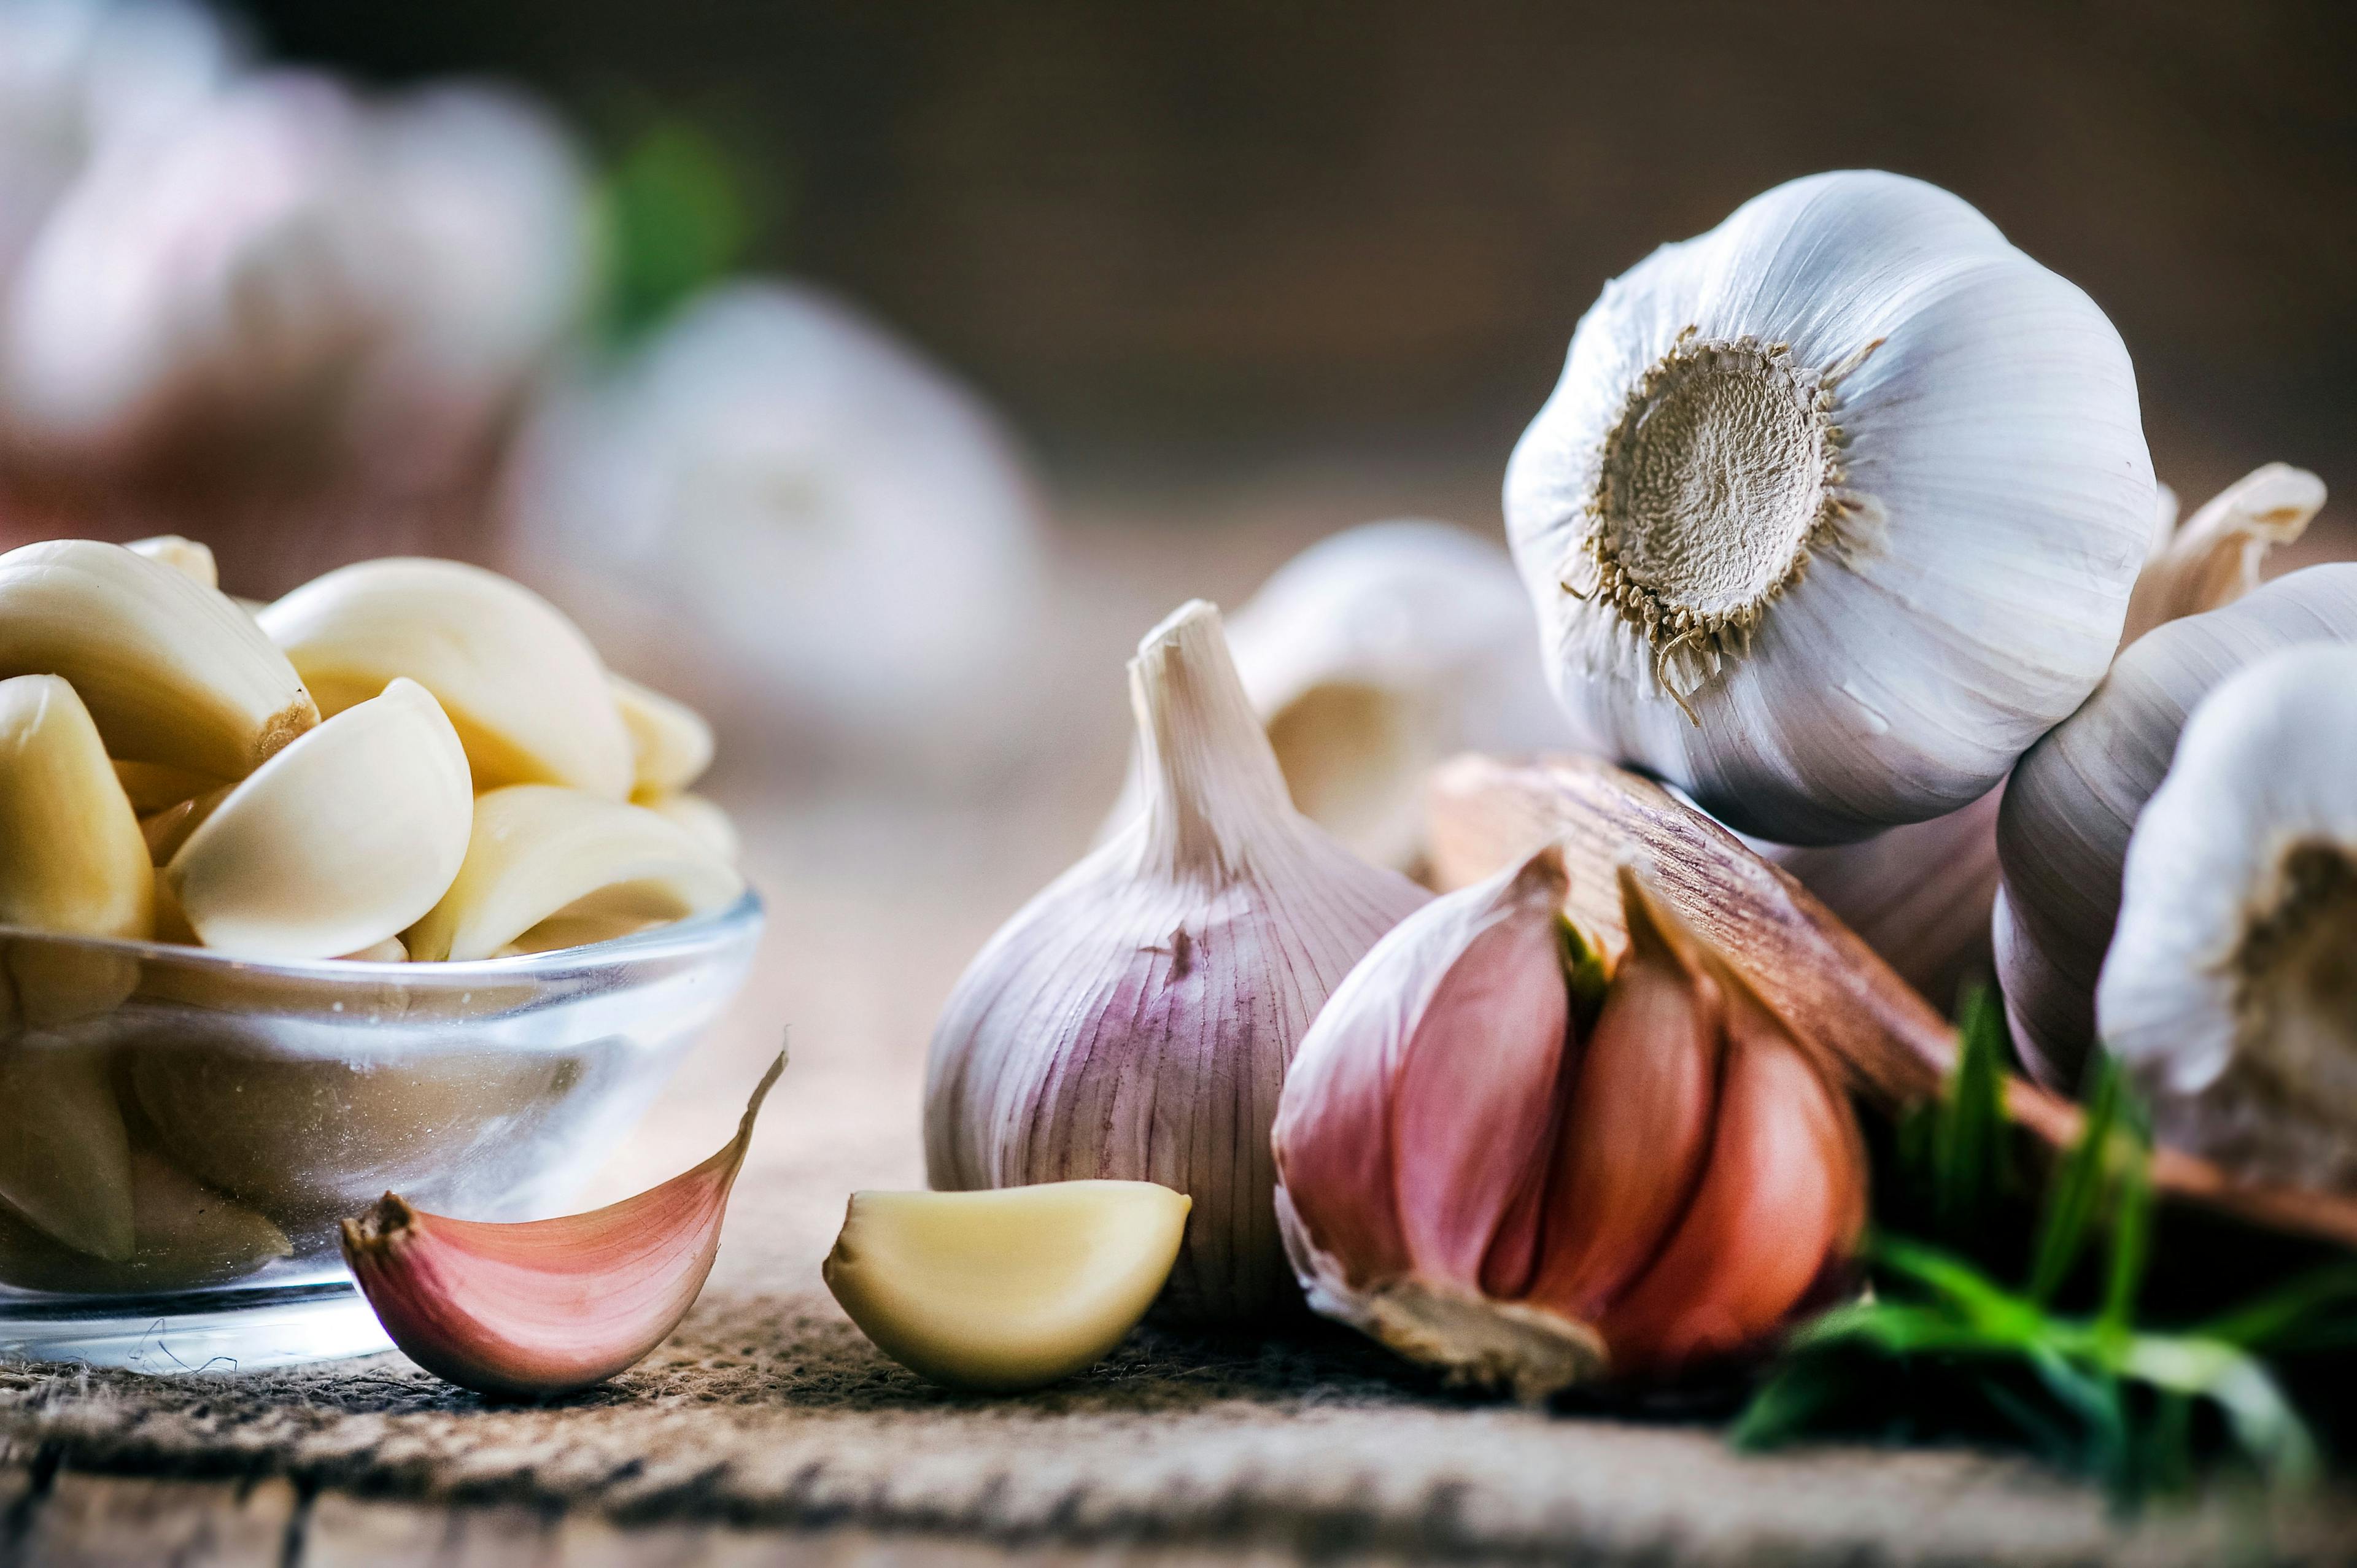 Garlic cloves on rustic table. Garlic in wooden bowl. Fresh peeled garlic and bulbs. | Image Credit: © Milan - stock.adobe.com